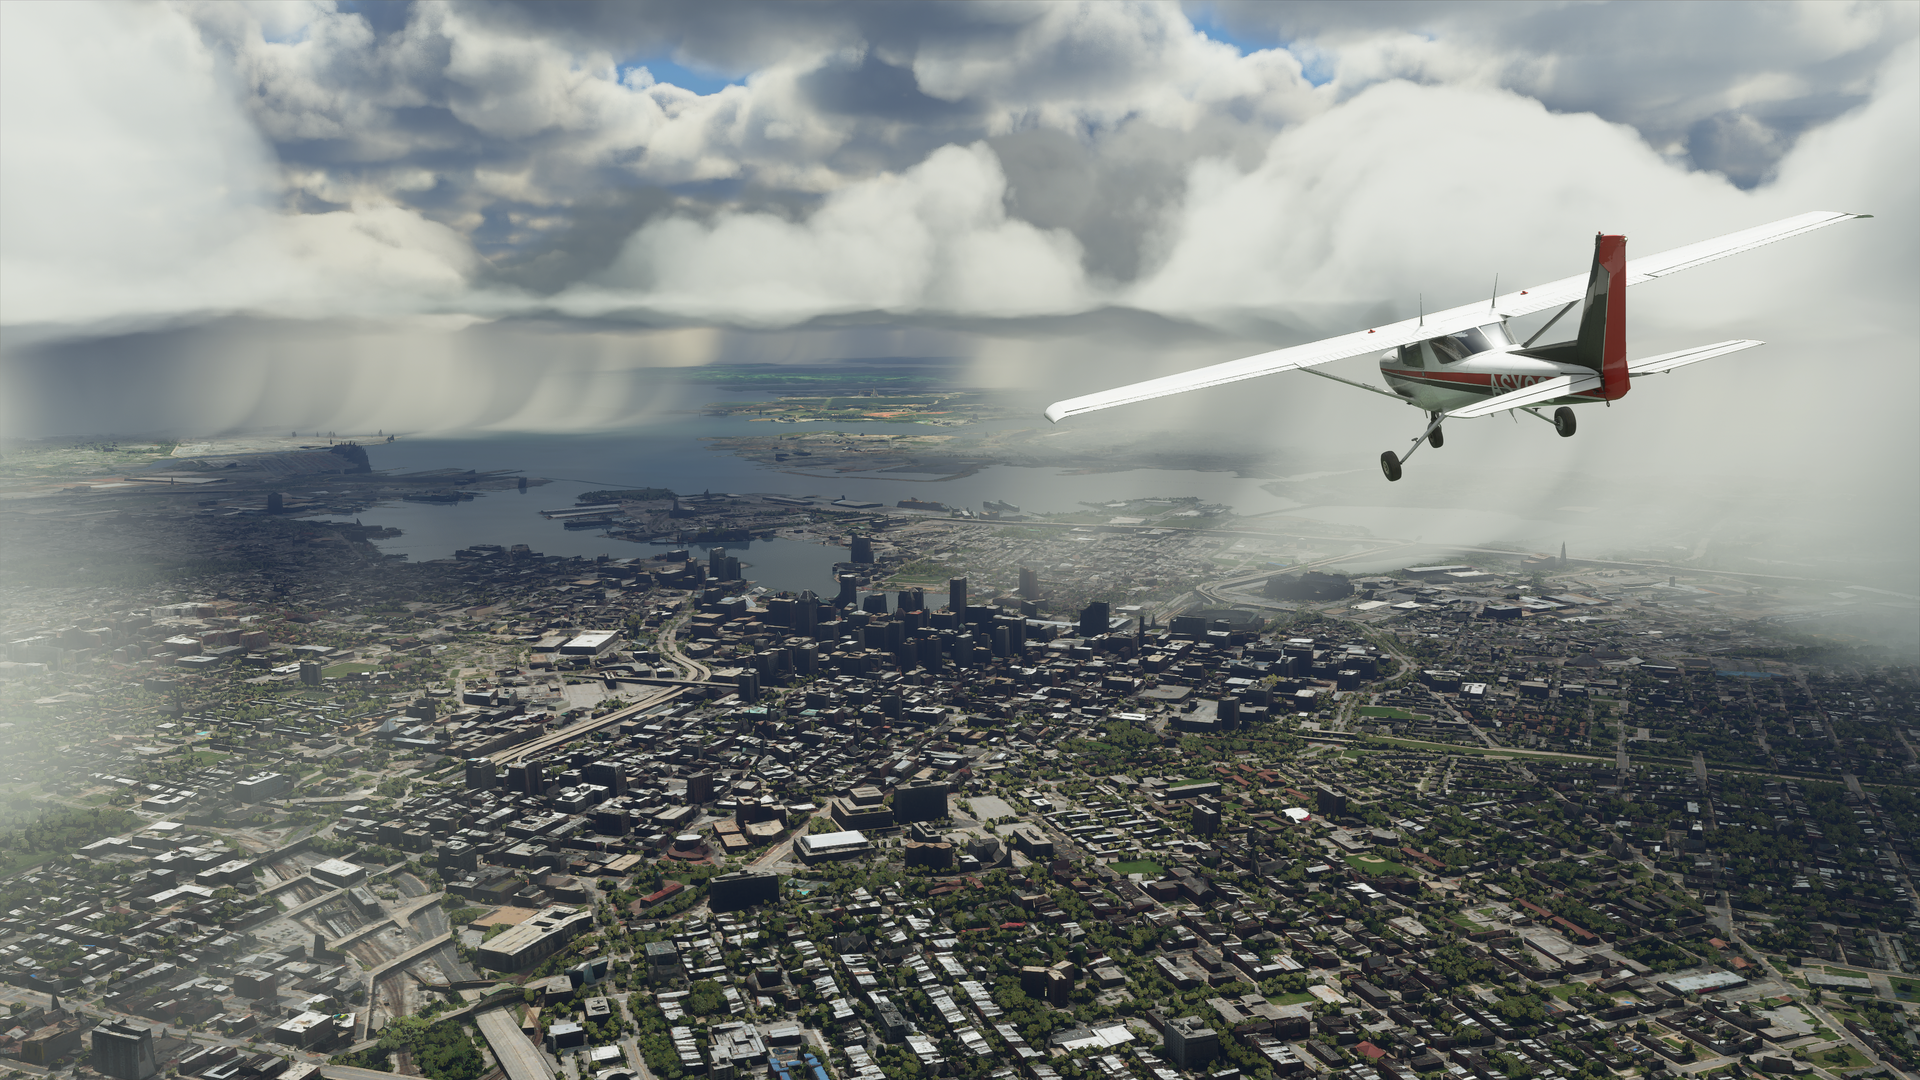 Microsoft Flight Simulator's lofty aims